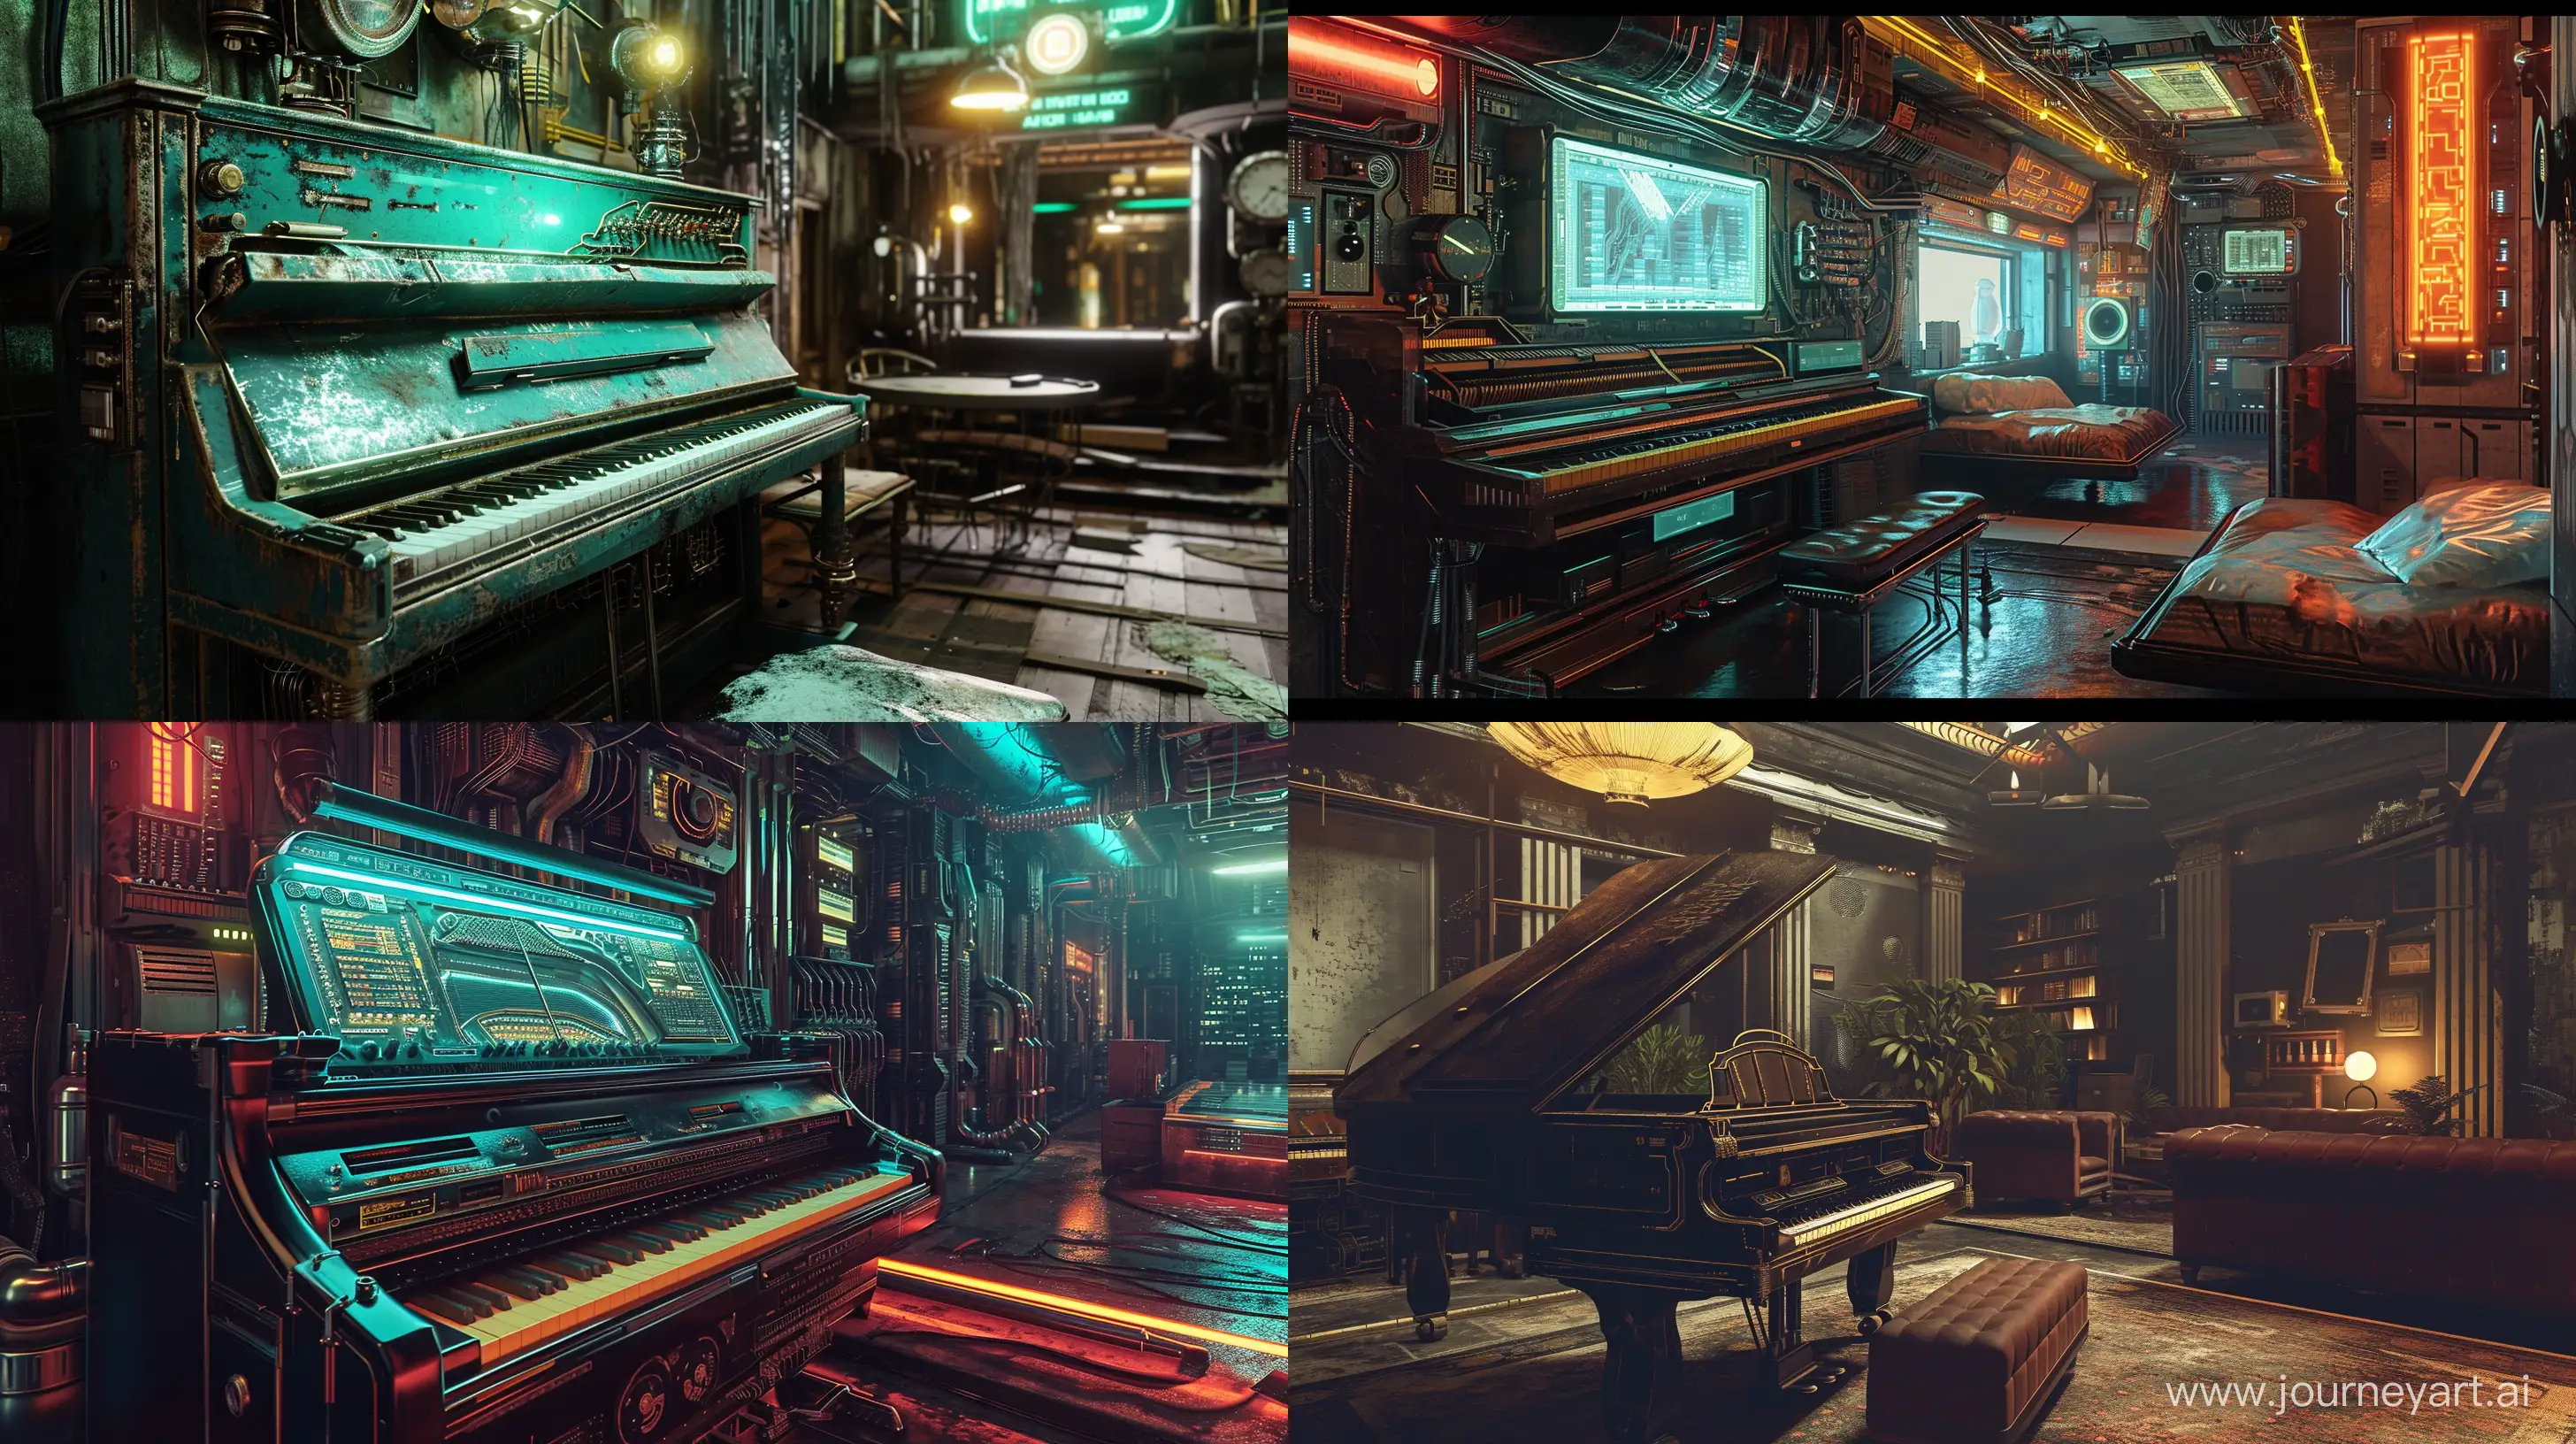 HyperRealistic-Cyberpunk-Piano-in-an-Intricate-Cyberpunk-Room